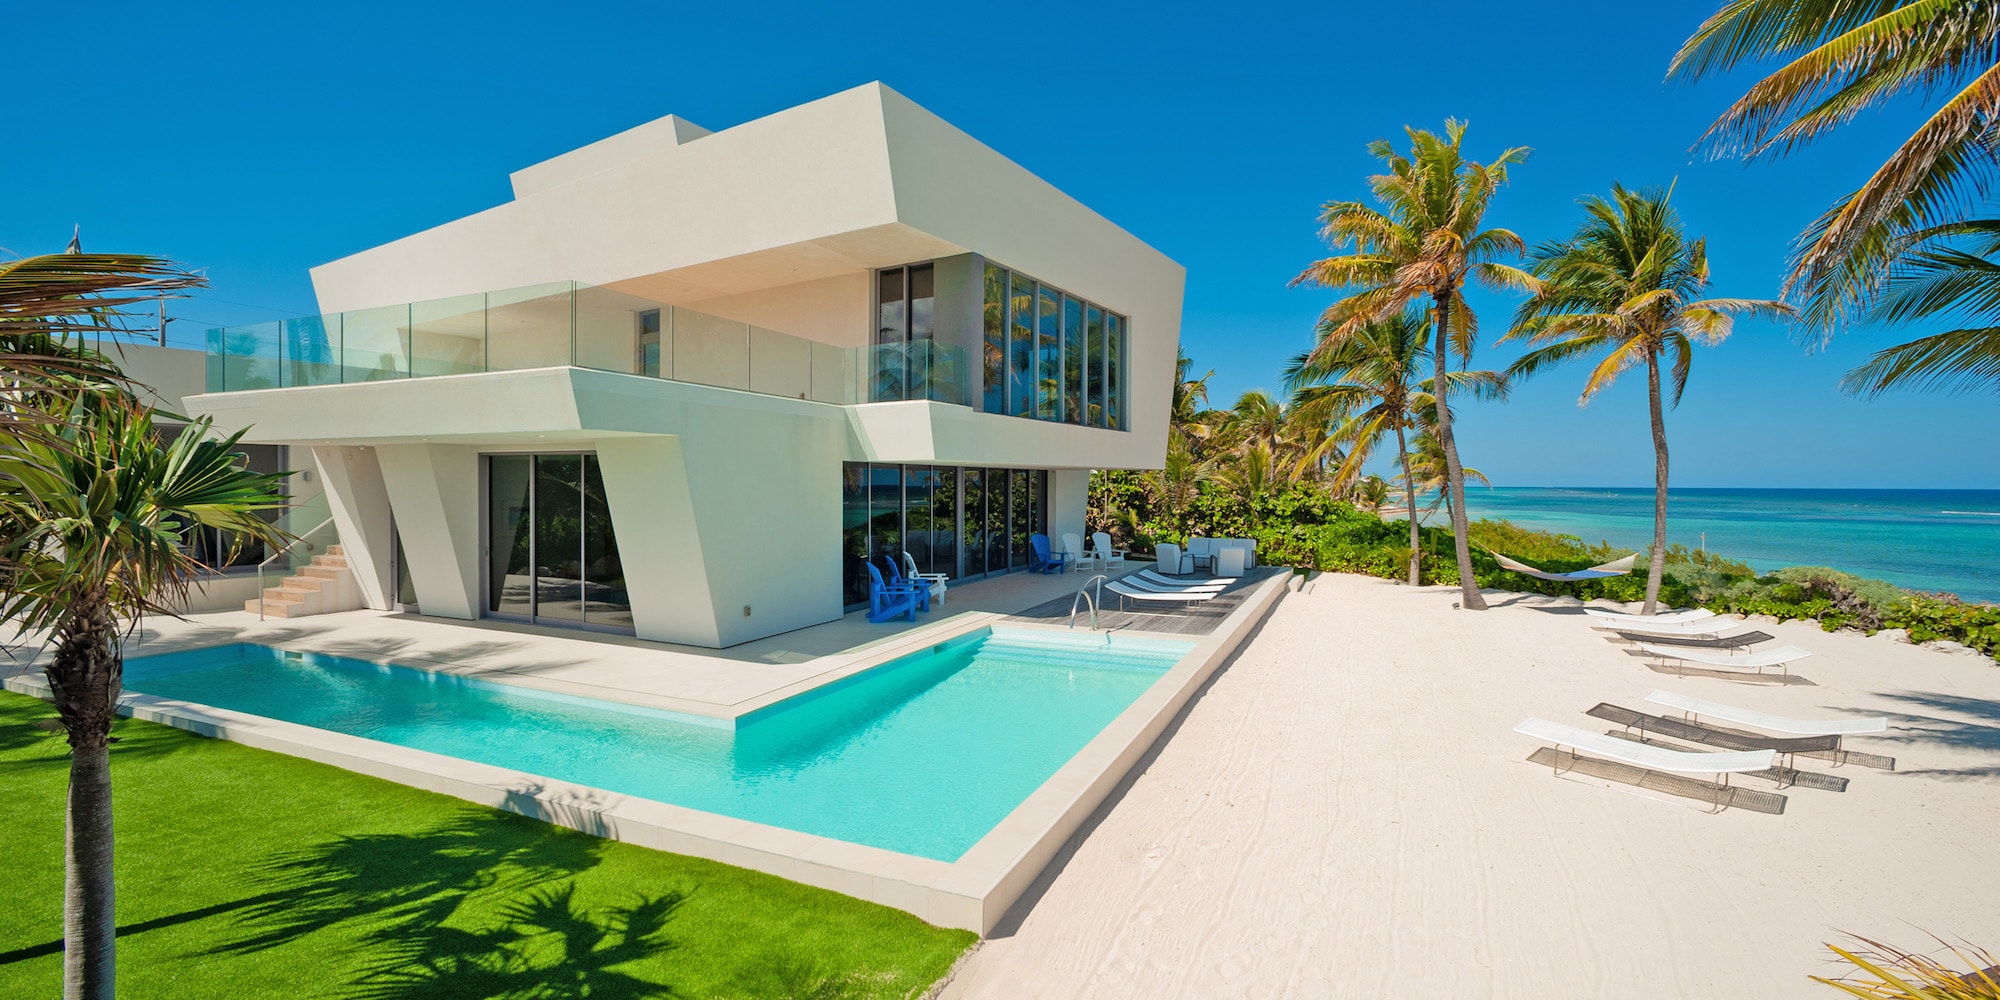 Olympus villa in Grand Cayman.